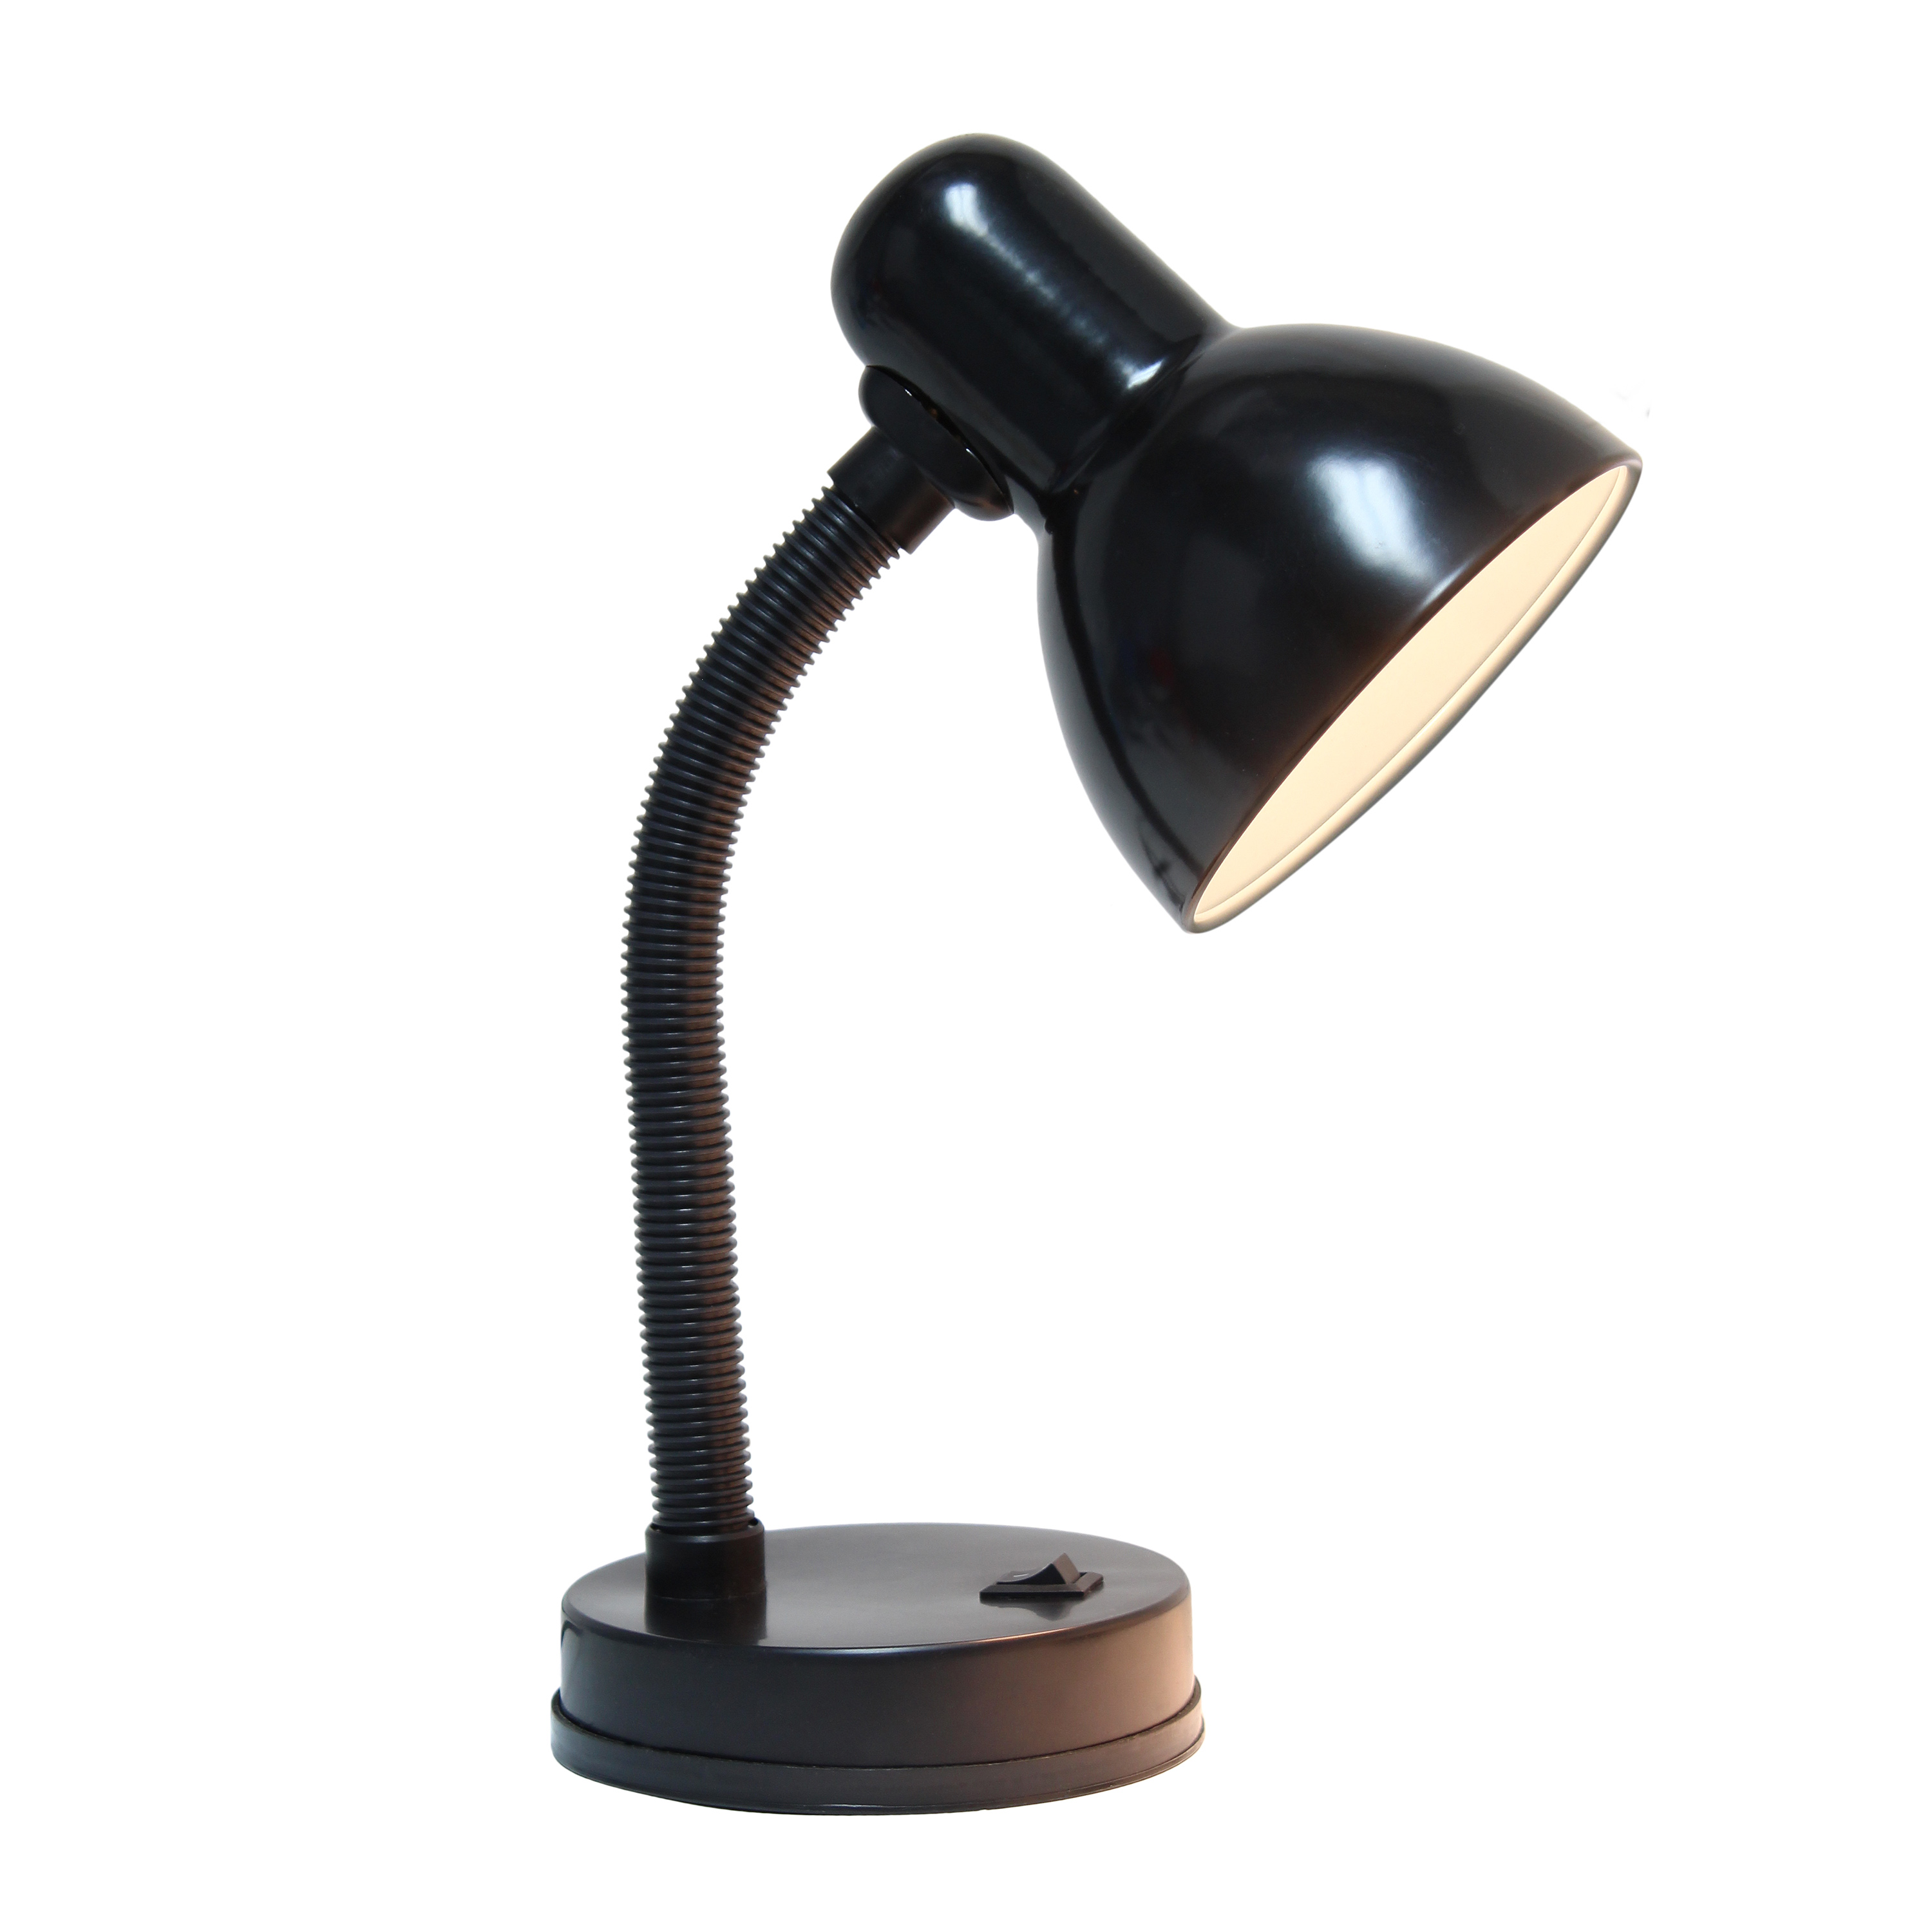 Simple Designs 14.25" Basic Metal Desk Lamp with Flexible Hose Neck, Black - image 3 of 13